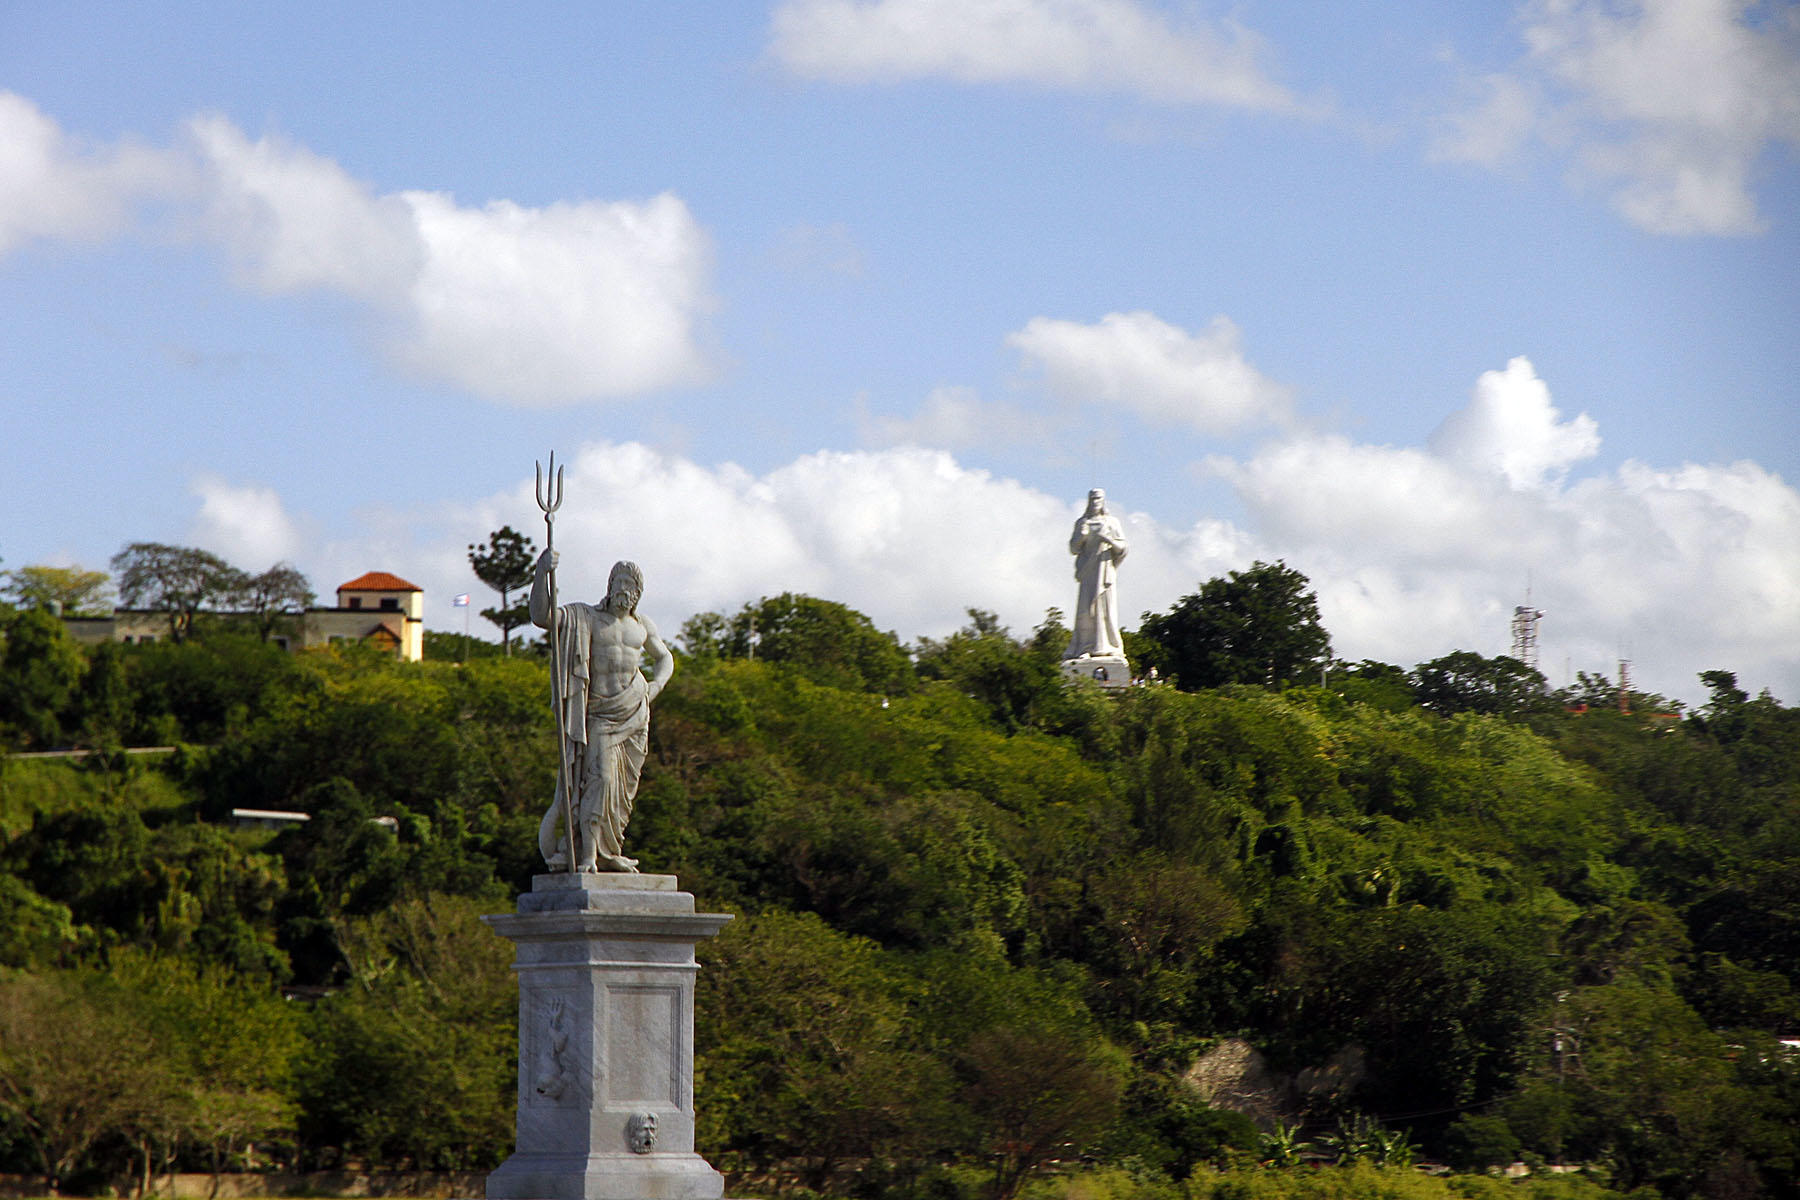 From Av de Puerto later in Havana, I photographed the Cristo statue